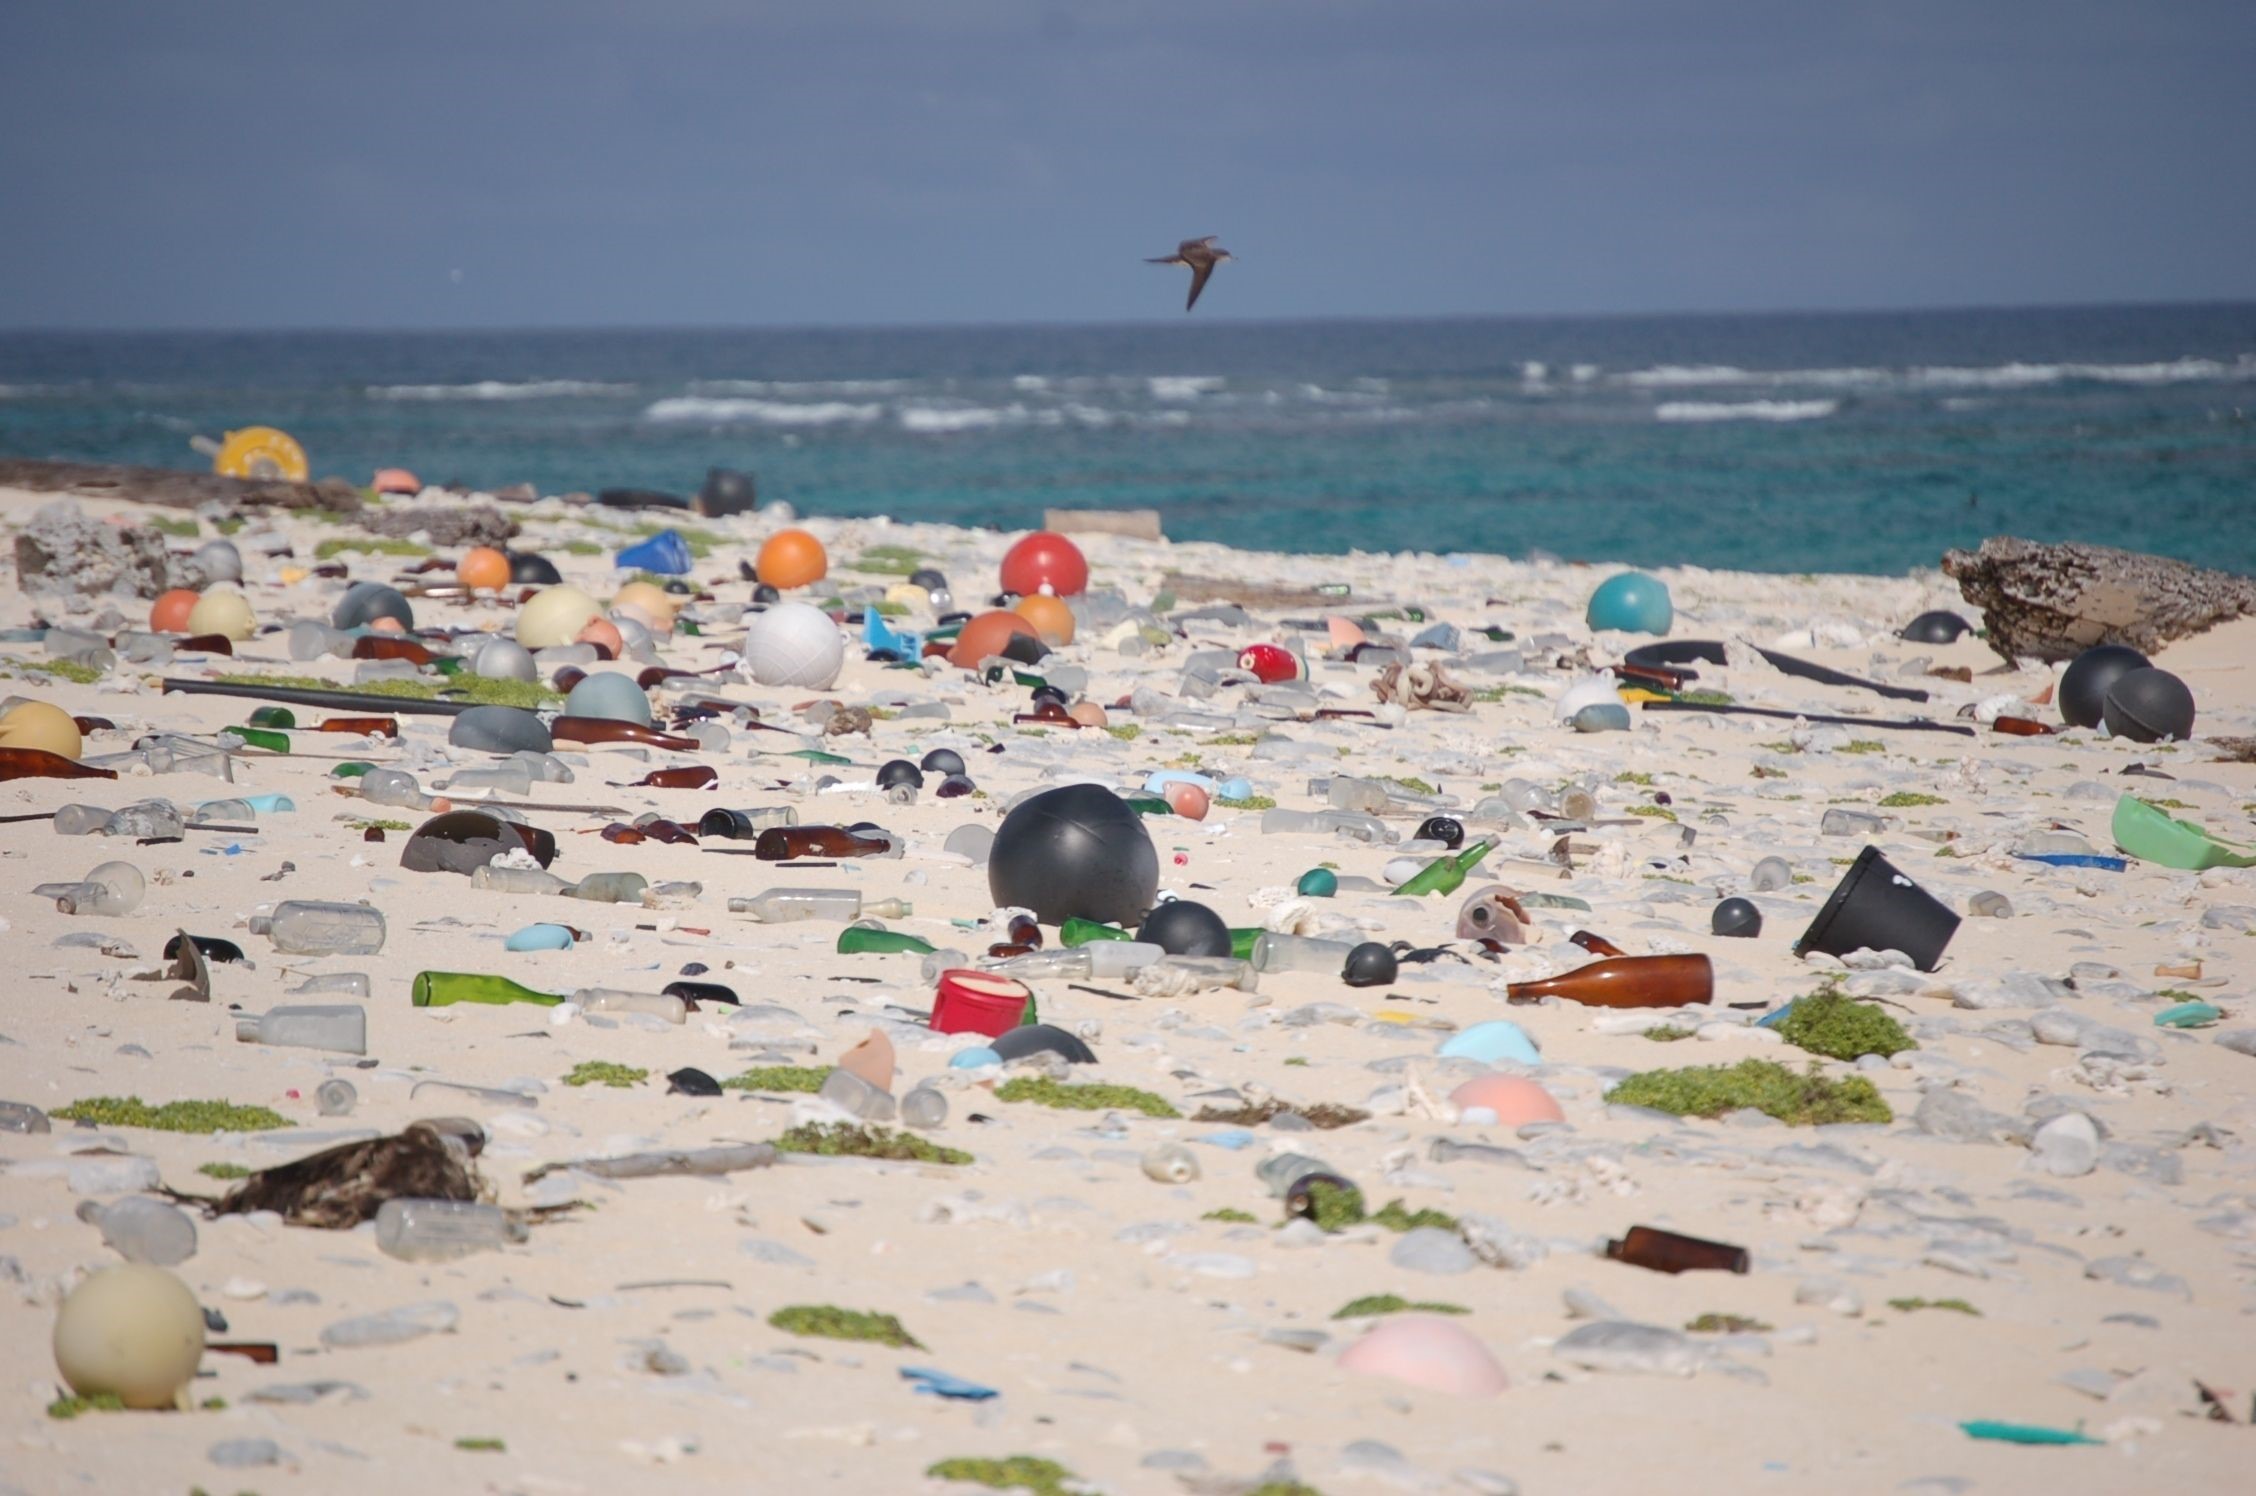 Coastal Erosion and Marine Litter Pollution